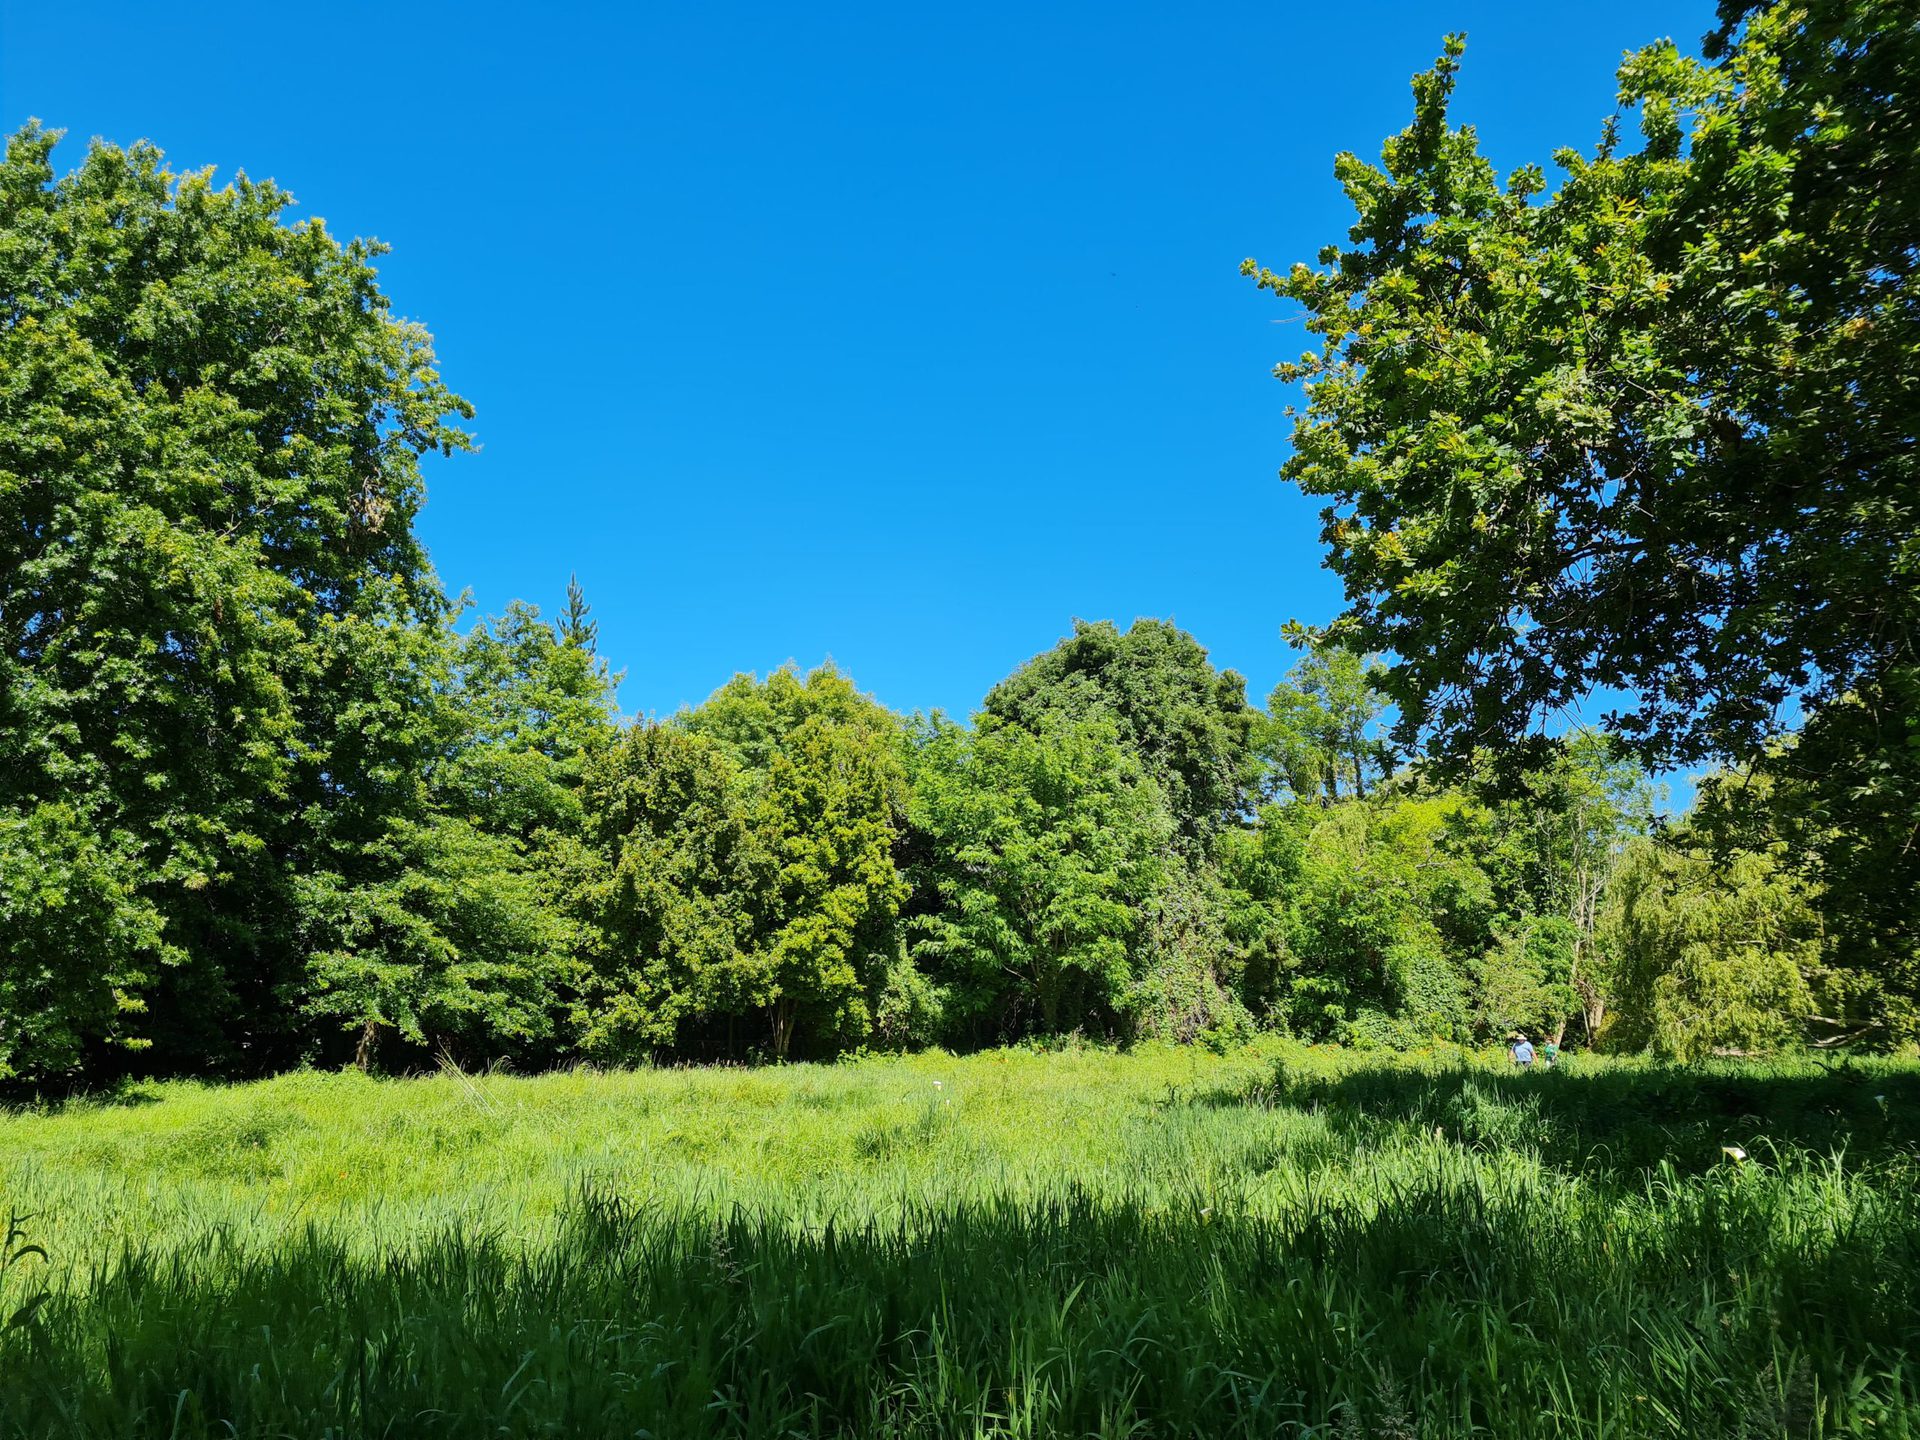 A 1X shot of a meadow via the Galaxy S20 FE.